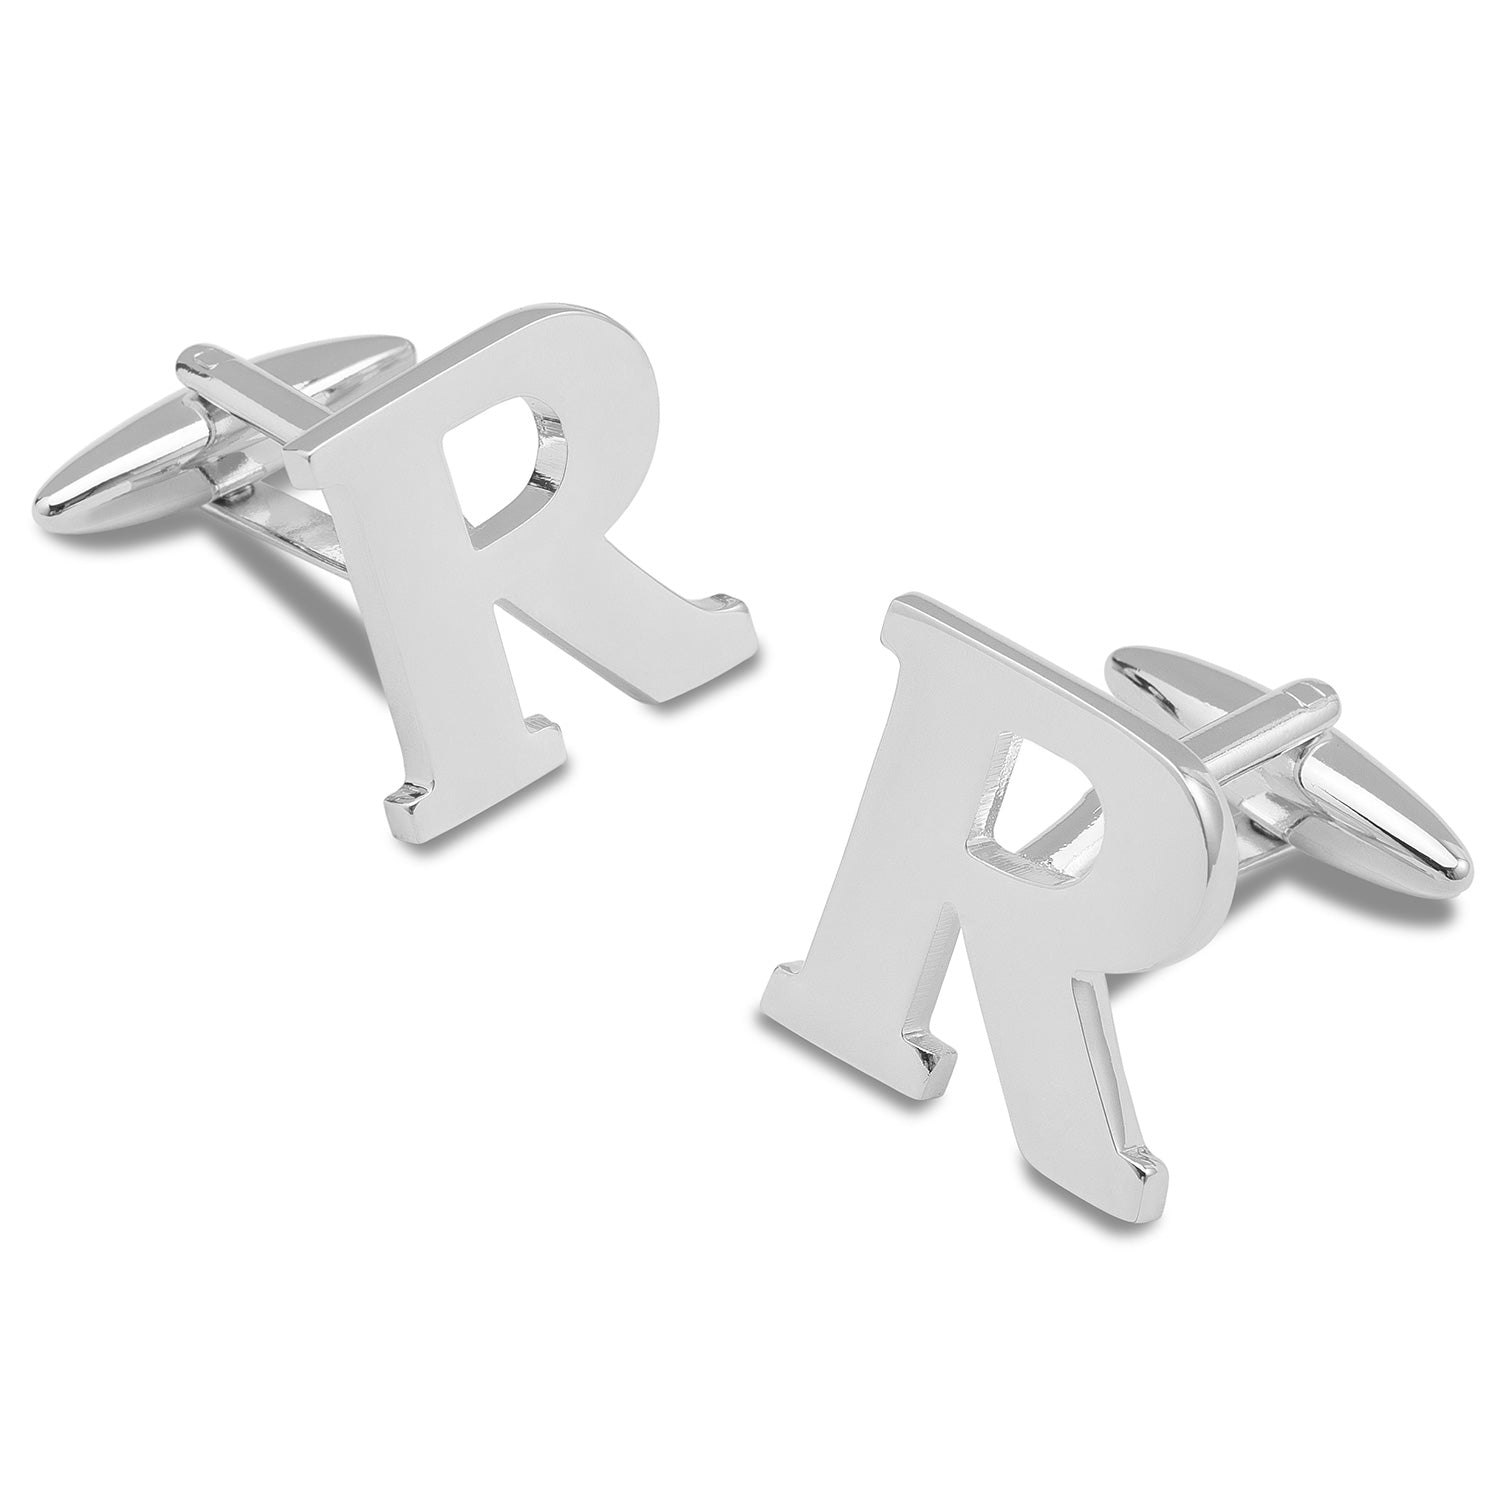 Letter R Silver Cufflinks